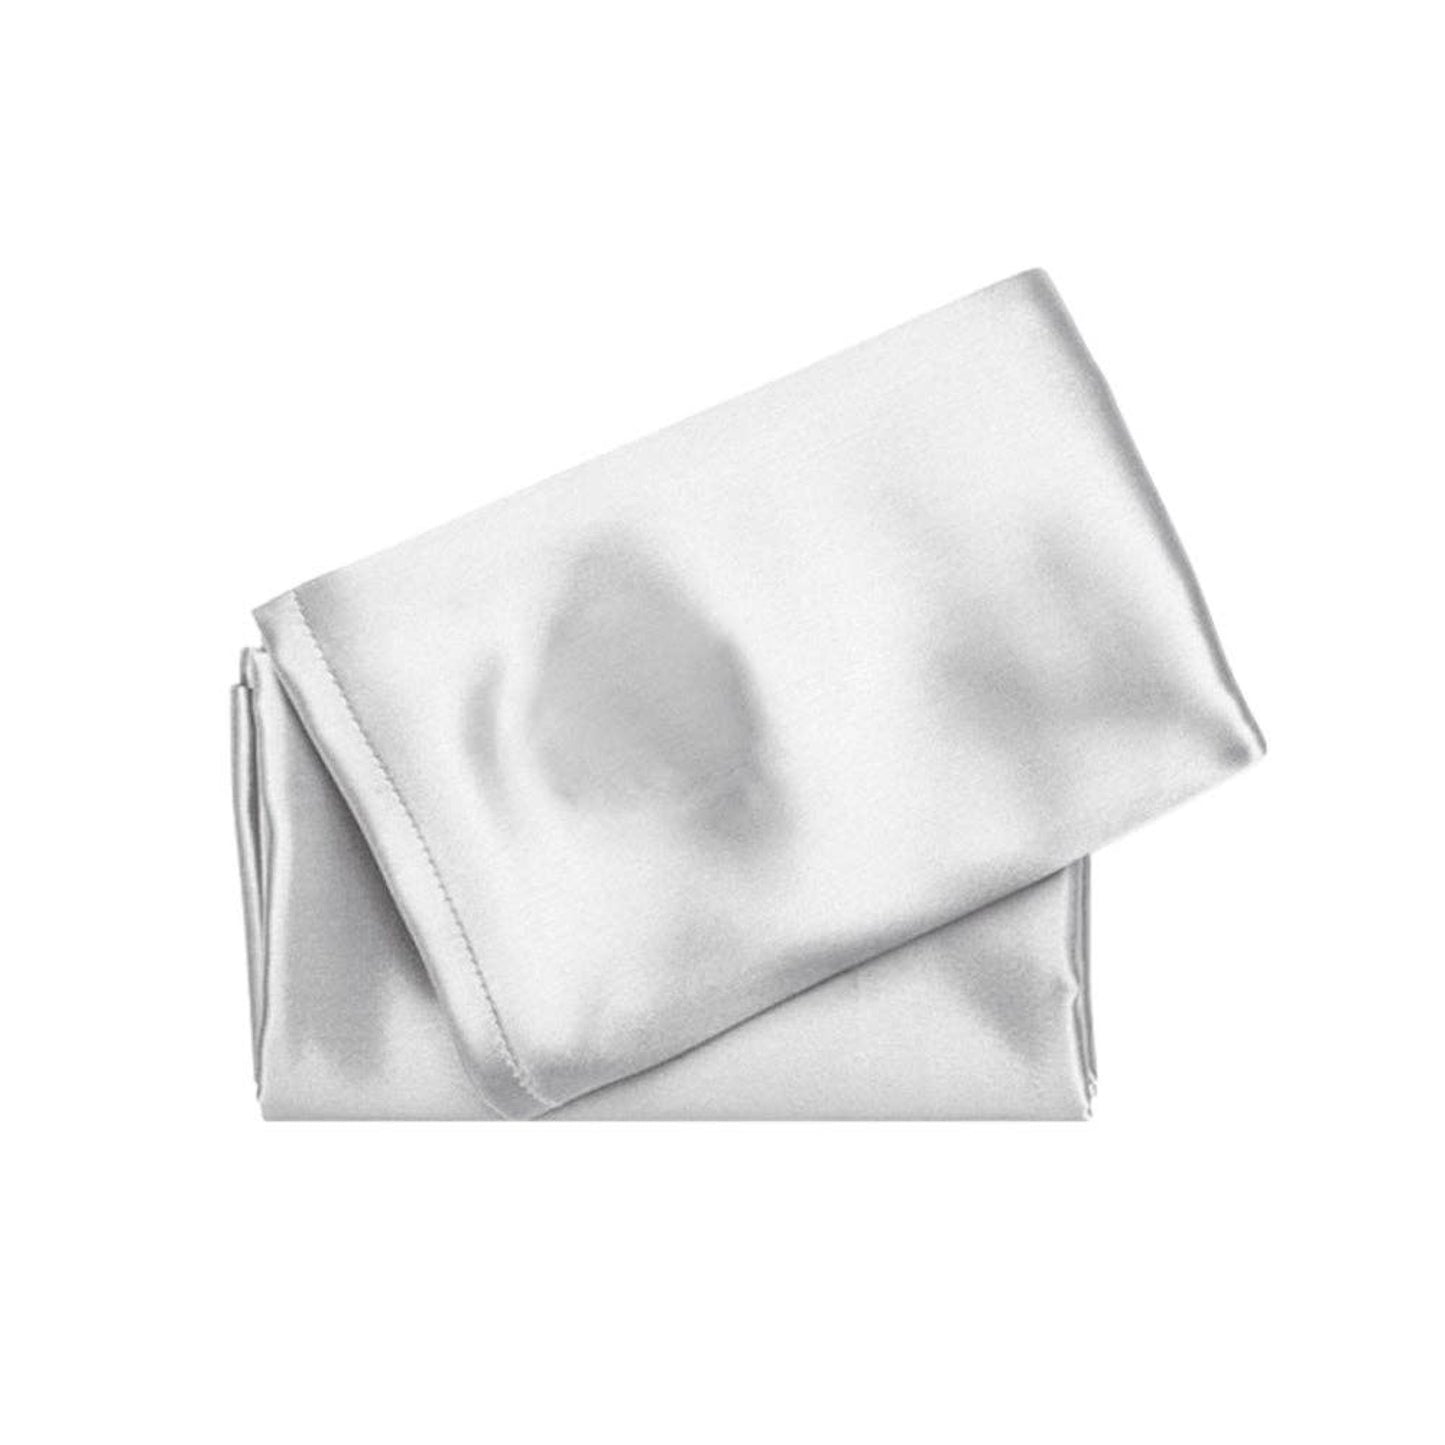 Hairembrace silk pillowcase - Set of 2